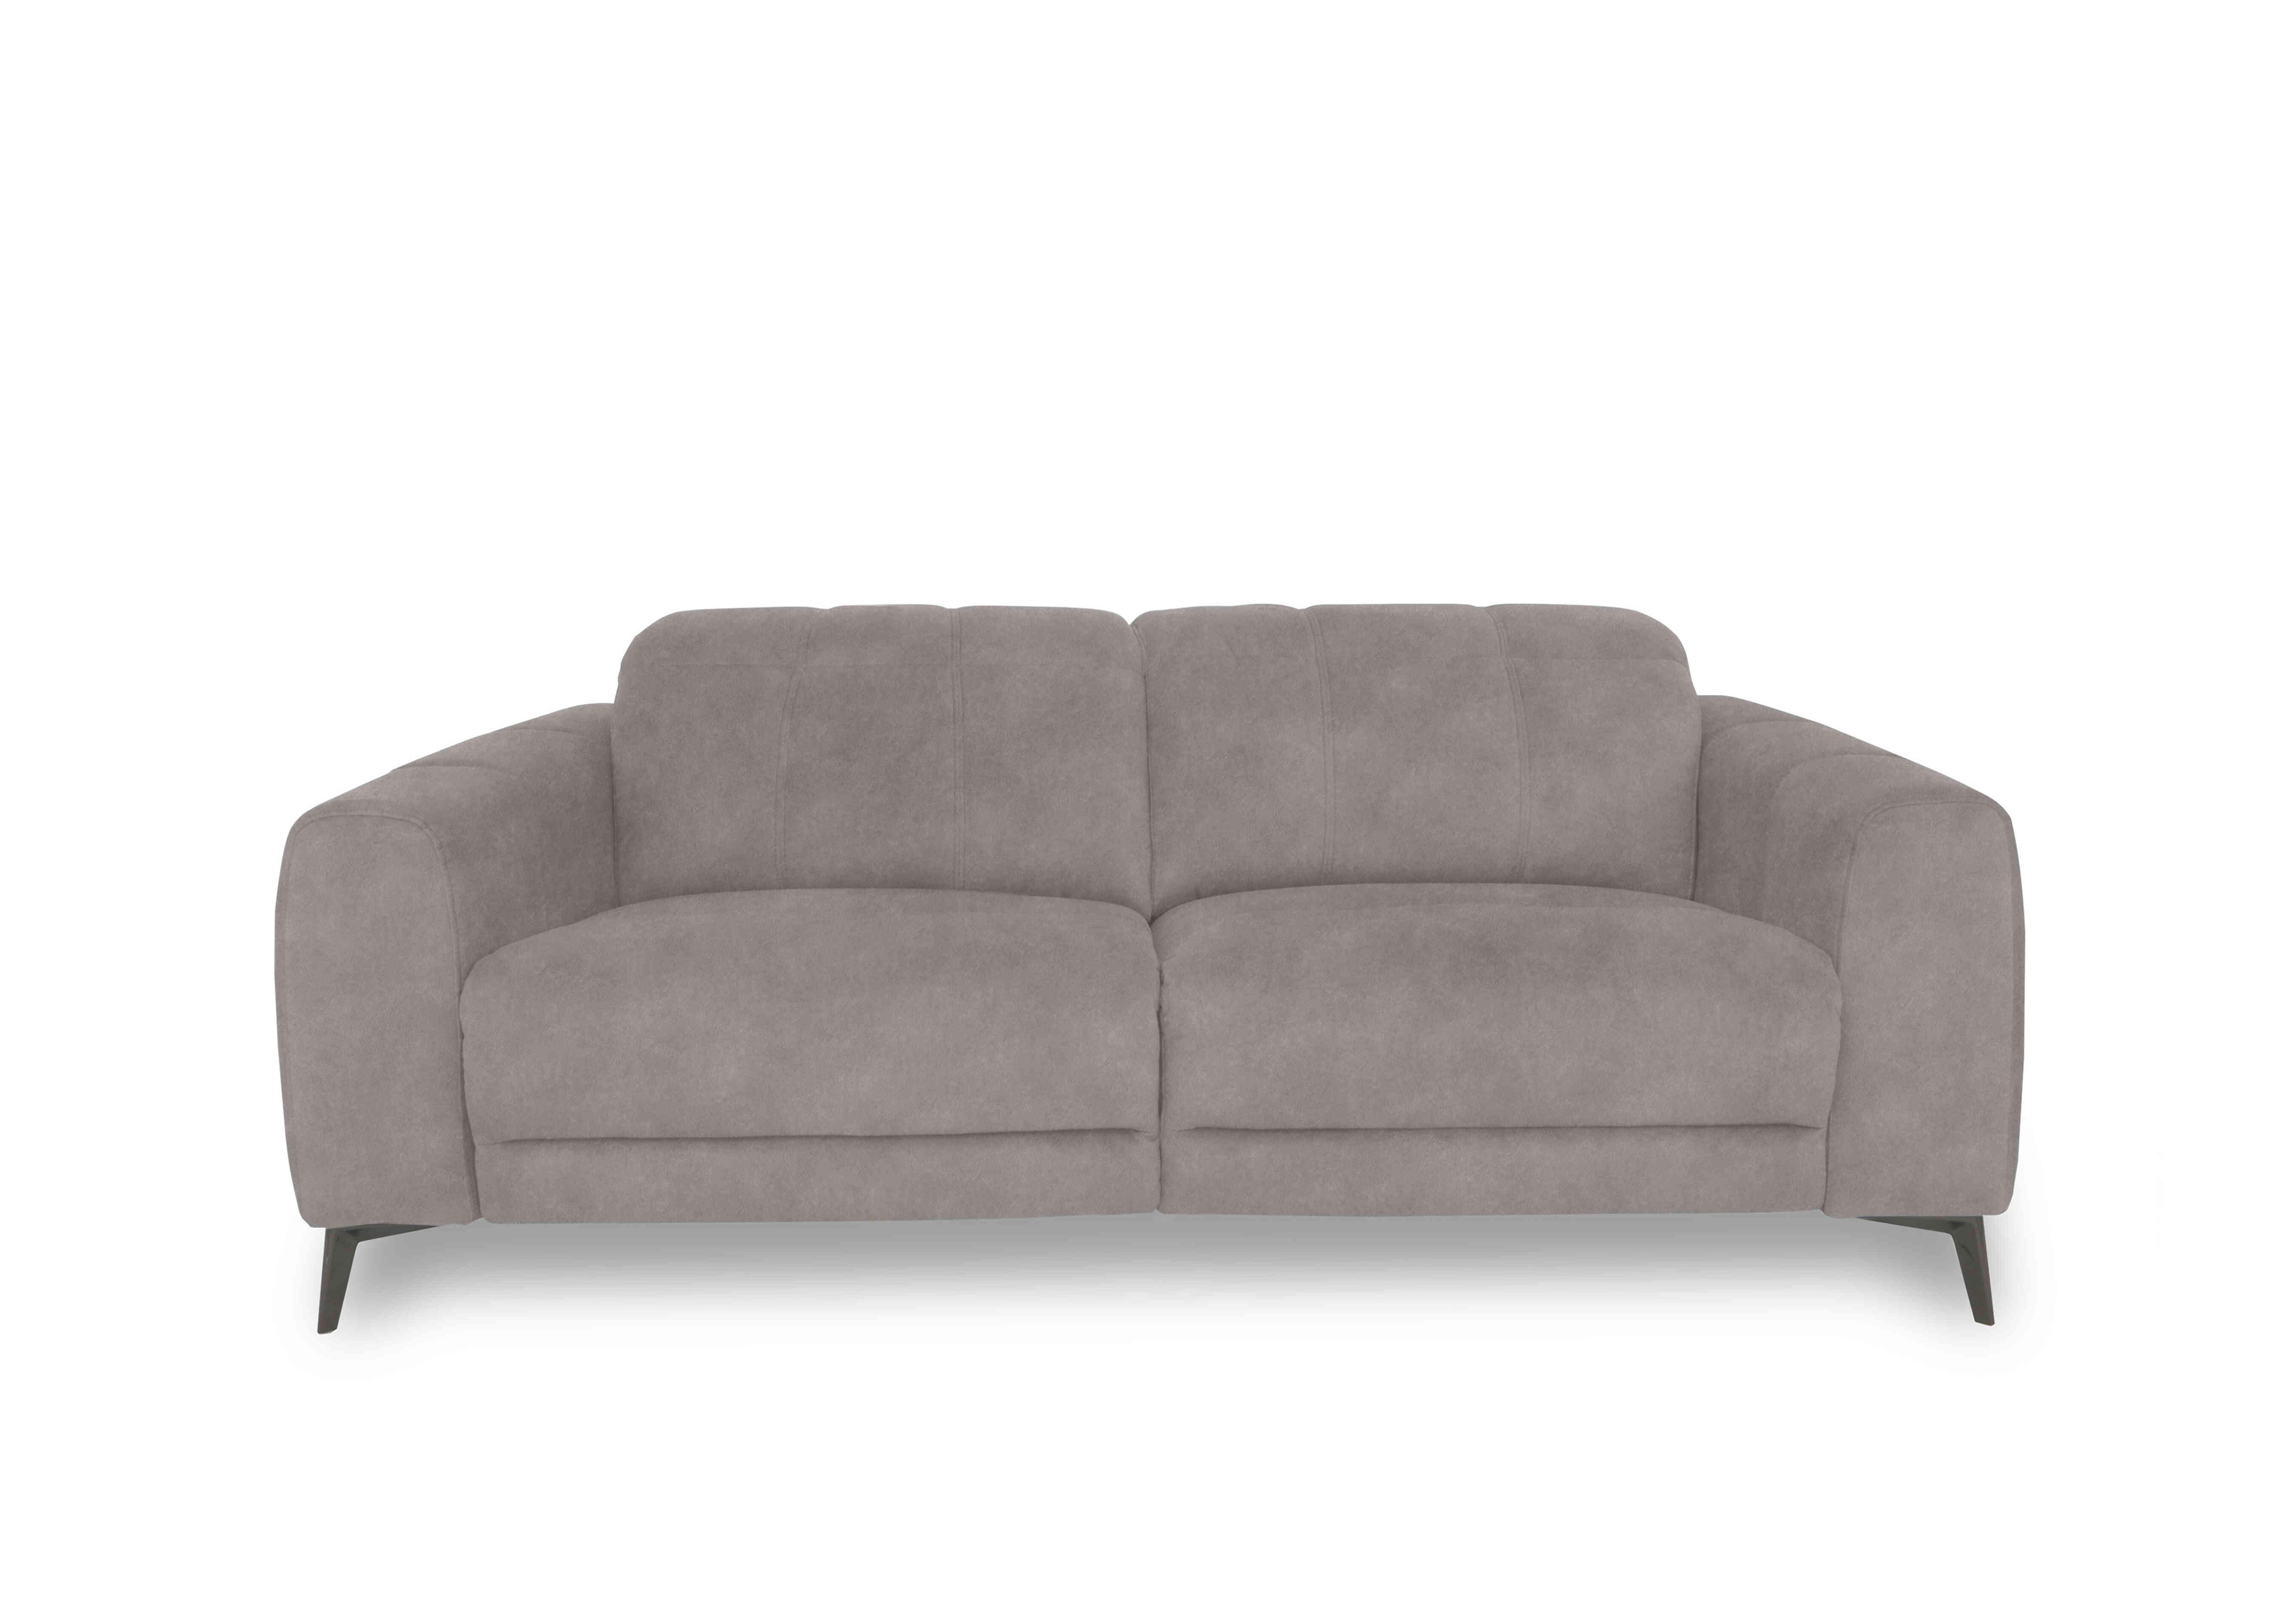 Ezra 3 Seater Fabric Sofa in Dexter 43502 Stone on Furniture Village